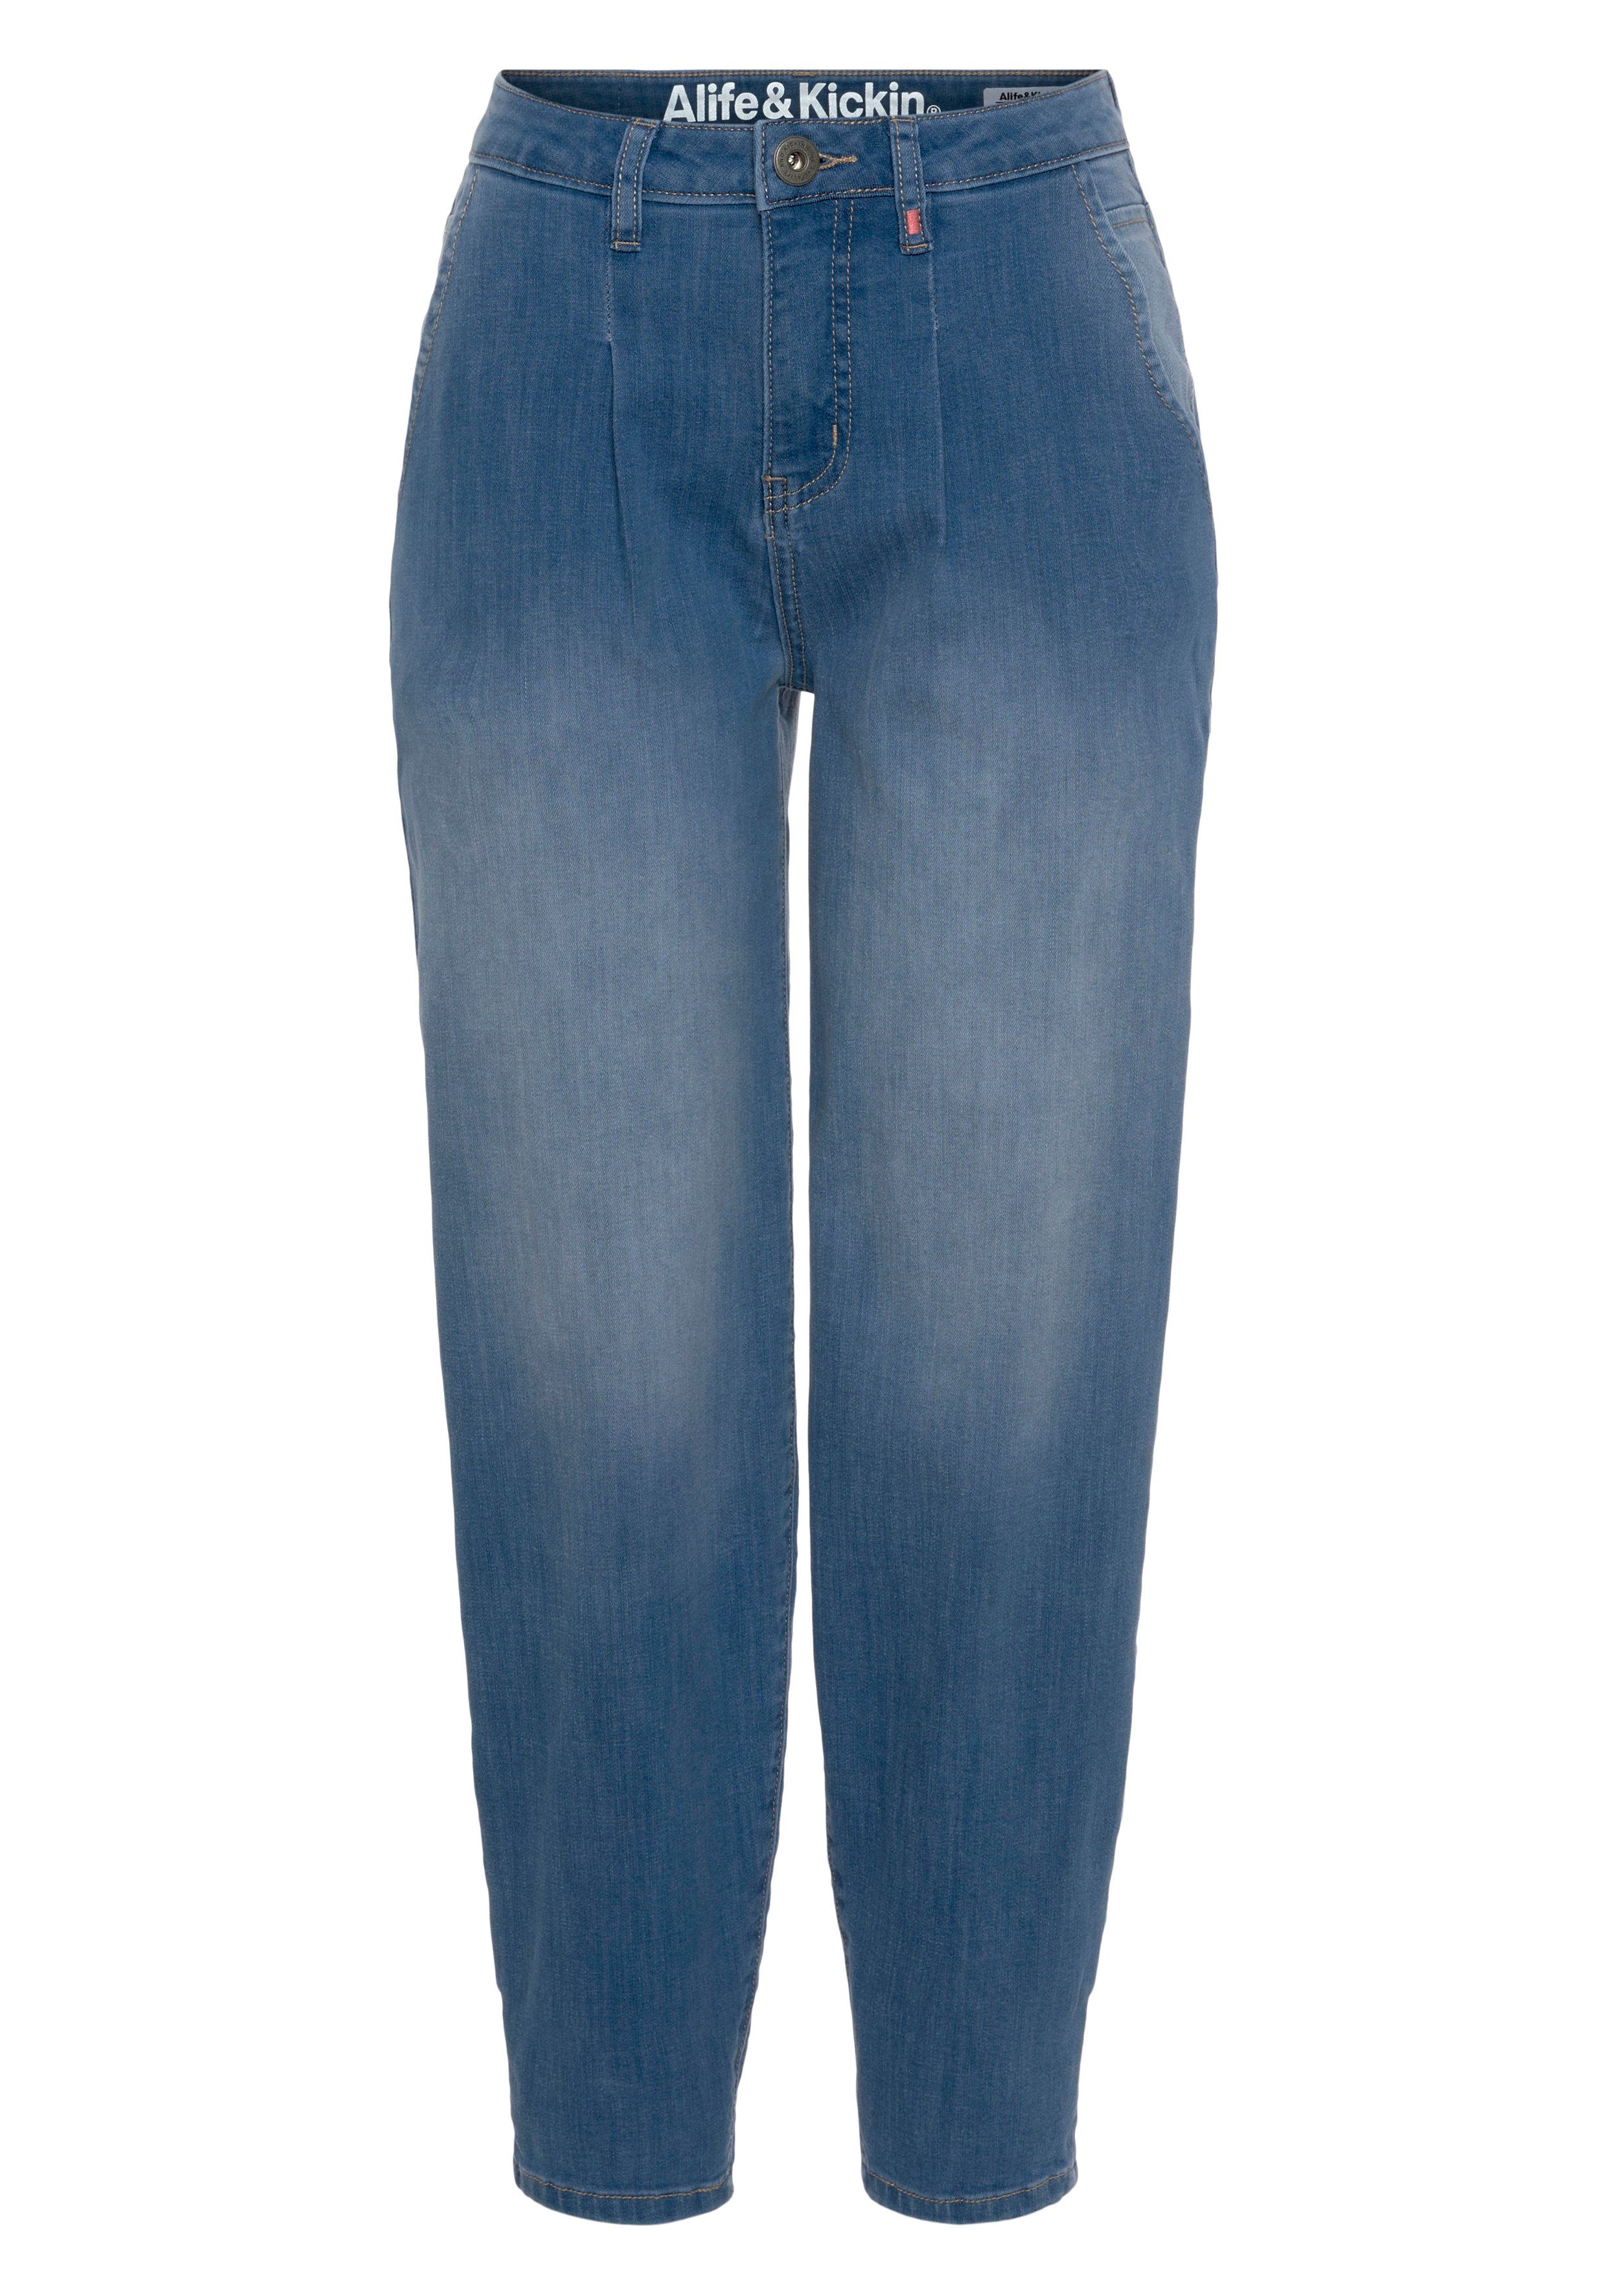 Loose-fit-Jeans & Alife KOLLEKTION TiraAK NEUE Kickin